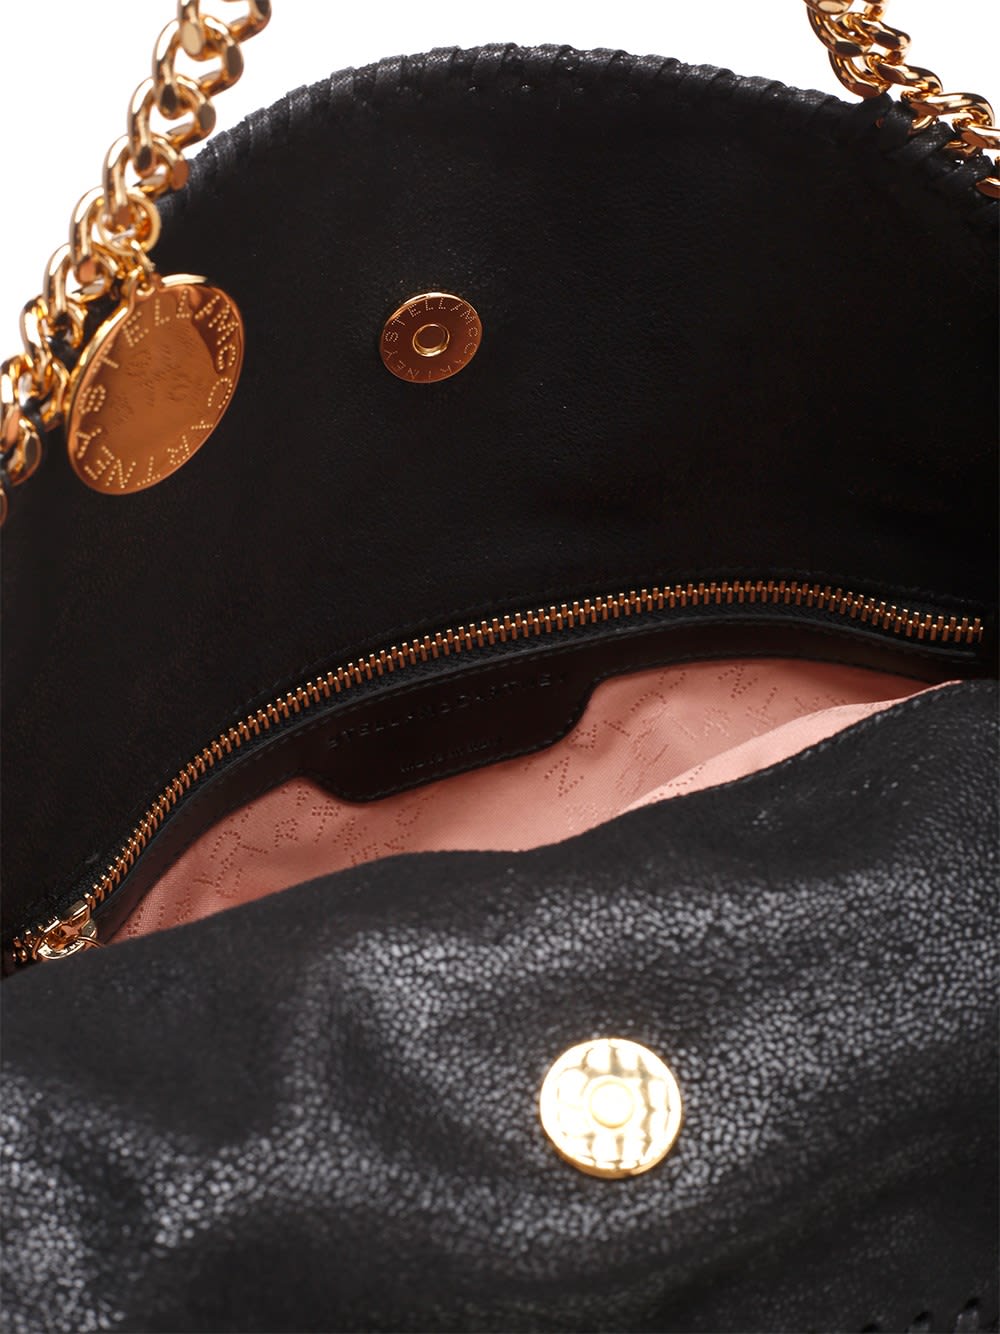 Shop Stella Mccartney Black And Gold Falabella Tote Bag